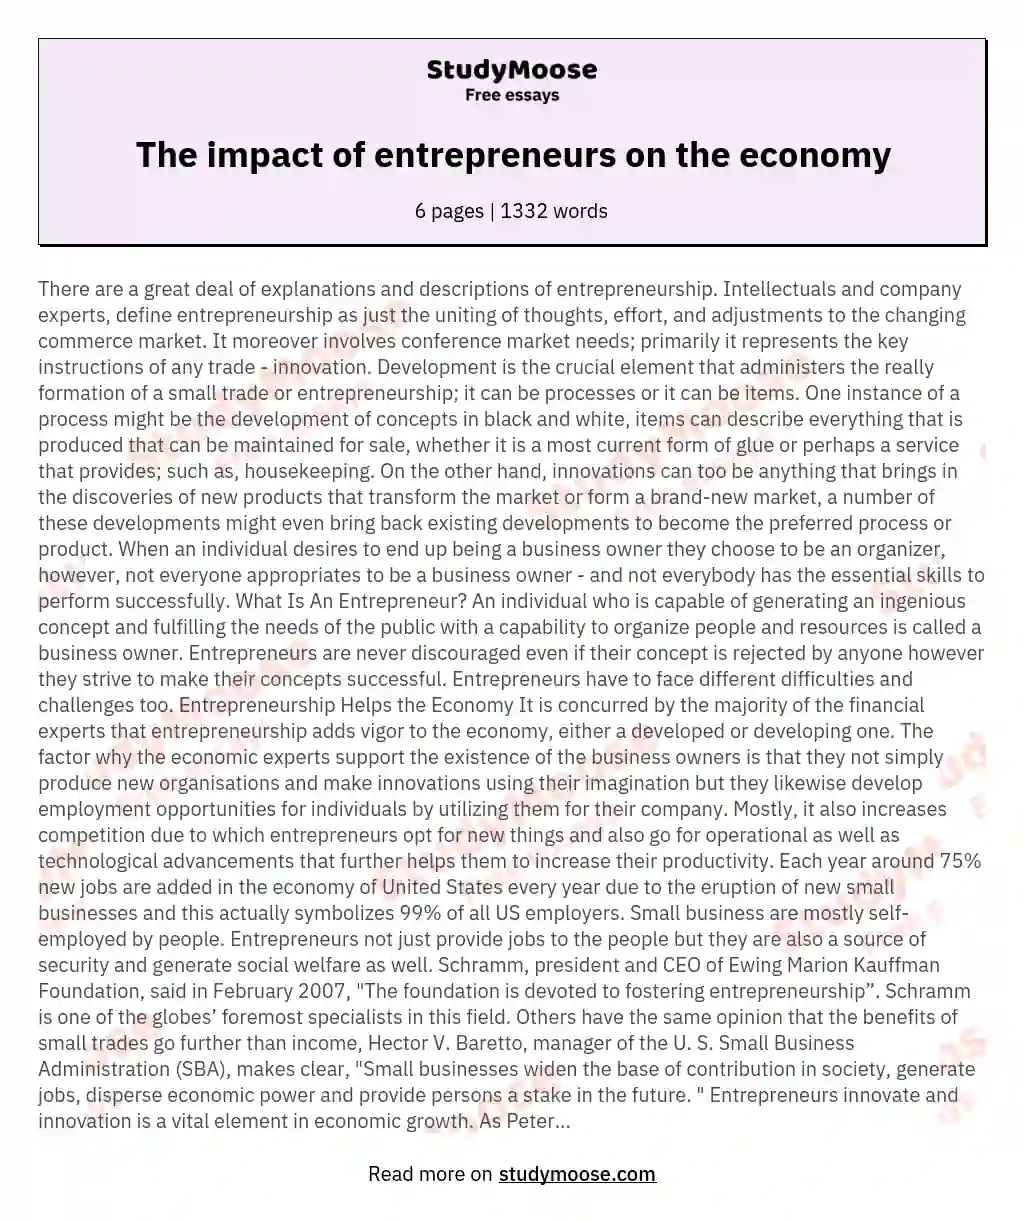 The impact of entrepreneurs on the economy